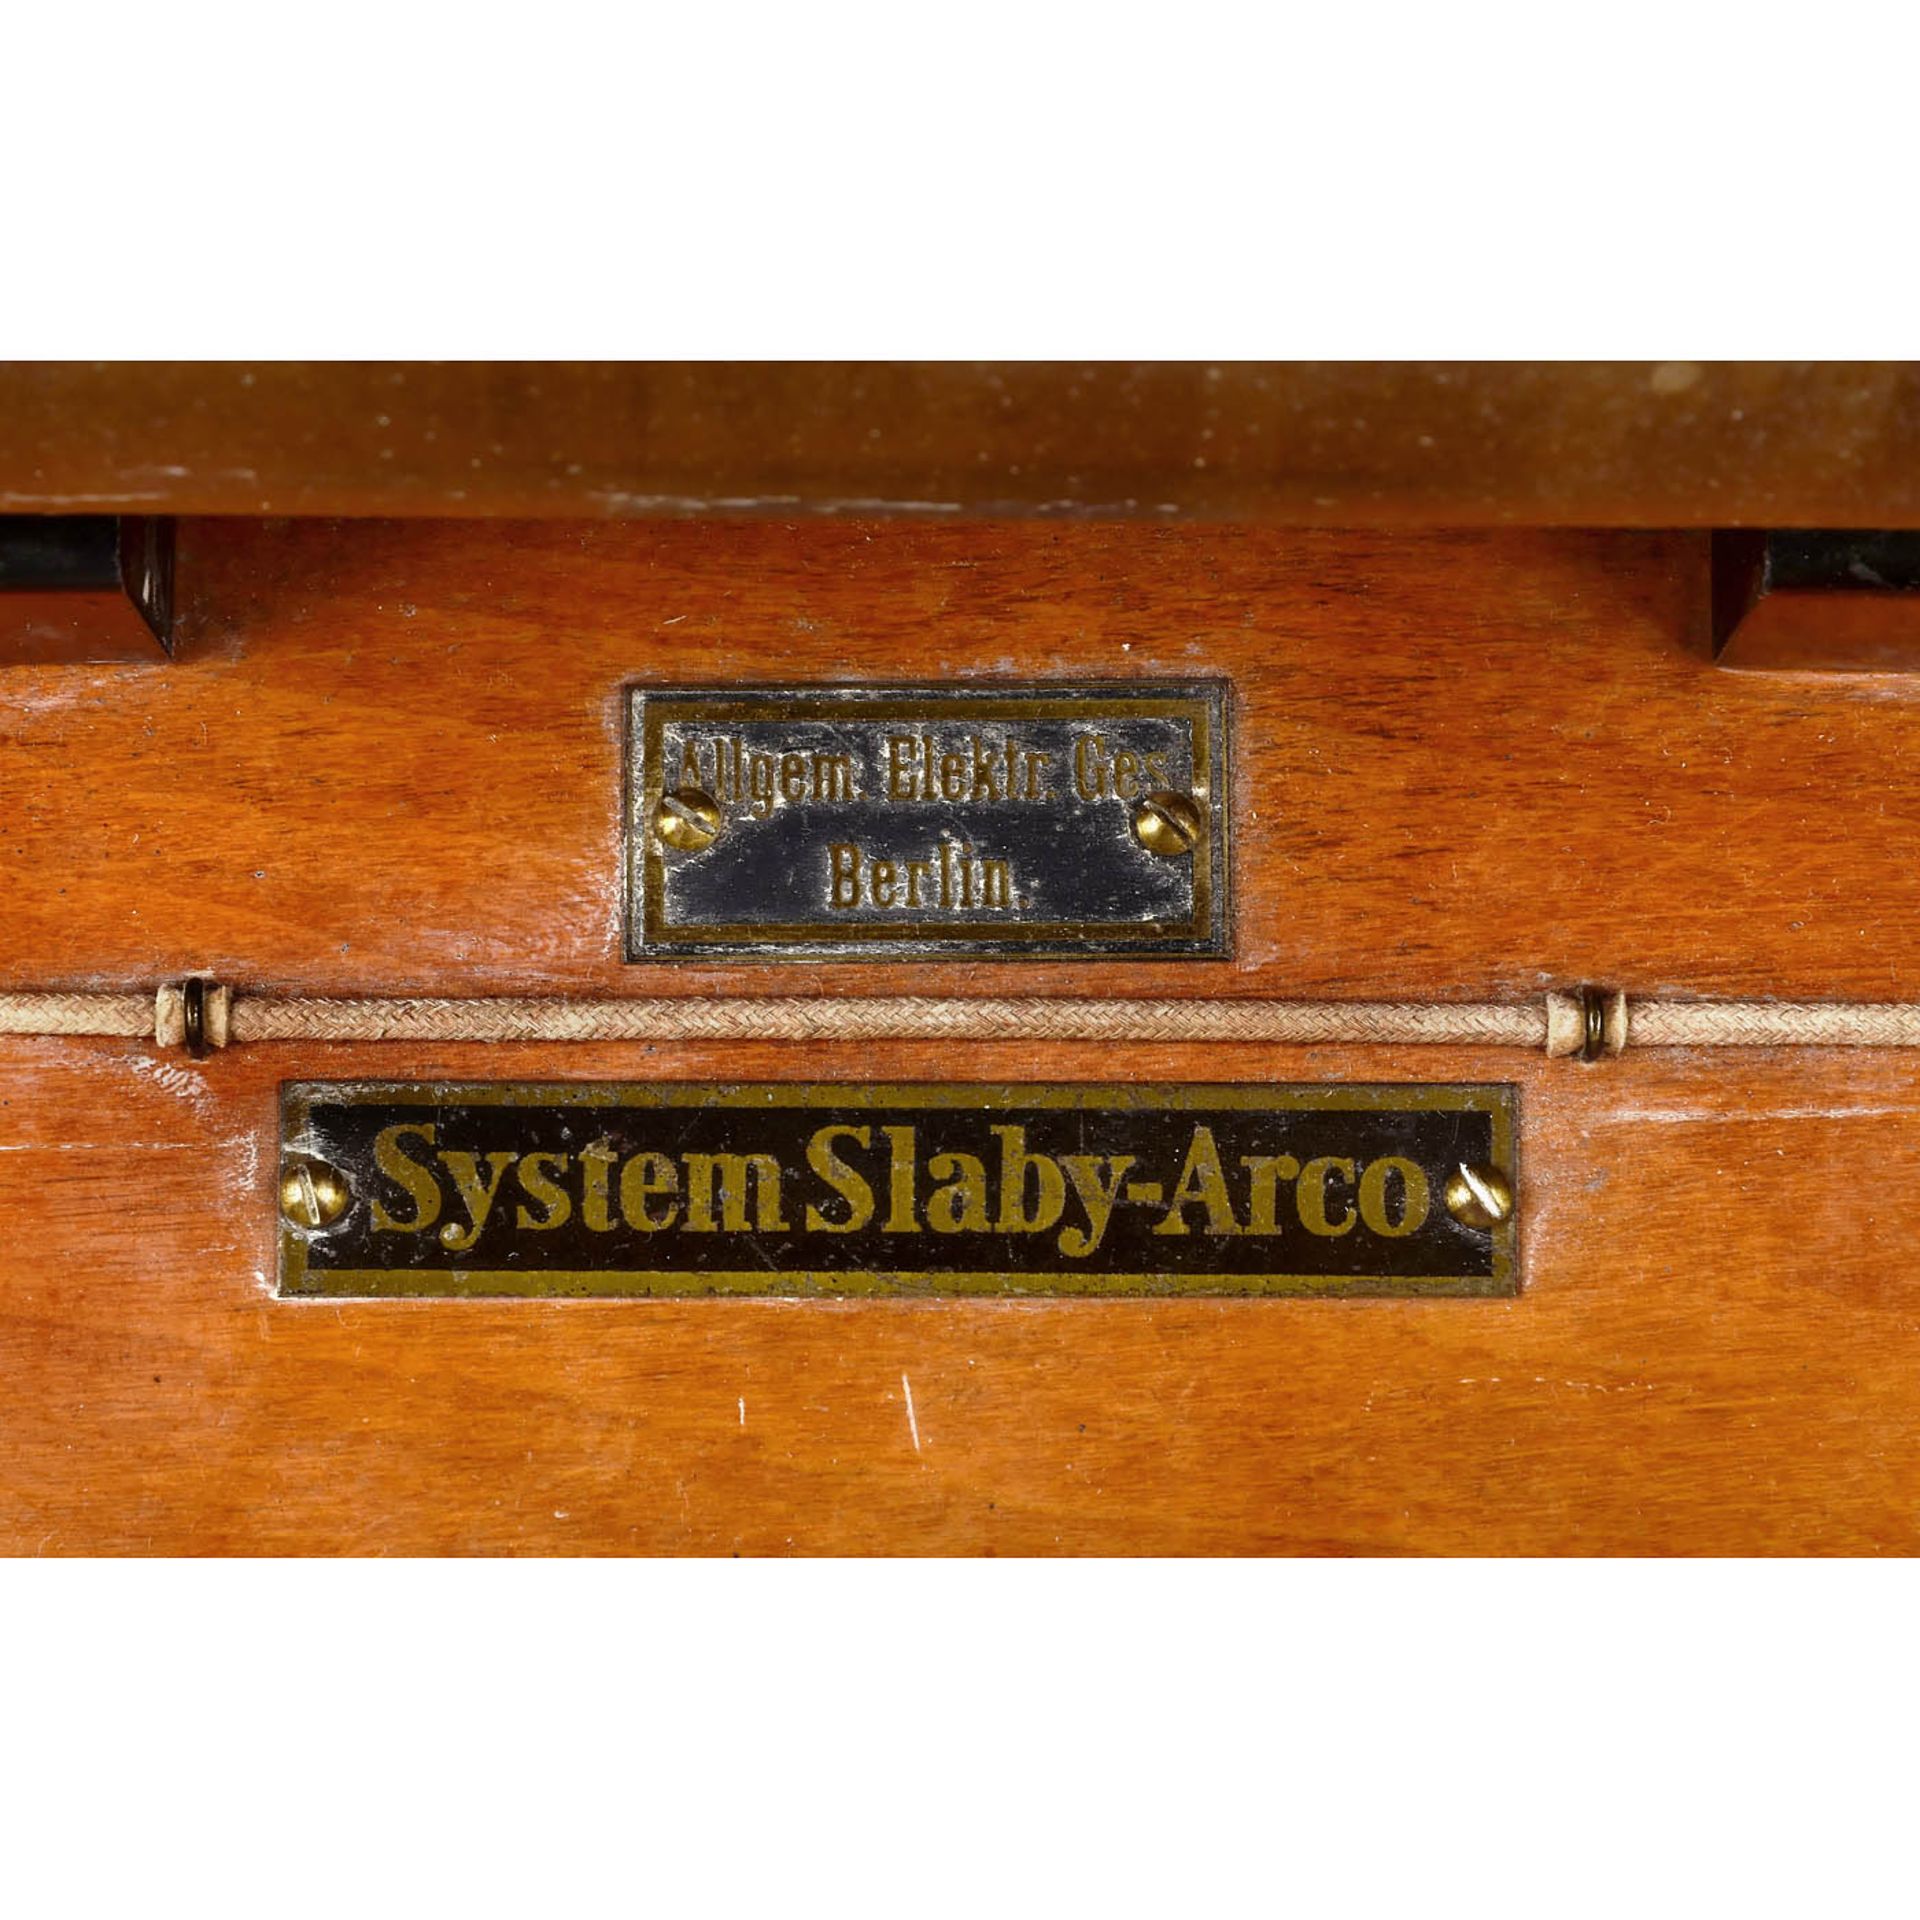 Slaby-Arco System Radiotelegraph Transmitter, c. 1900 - Bild 3 aus 3